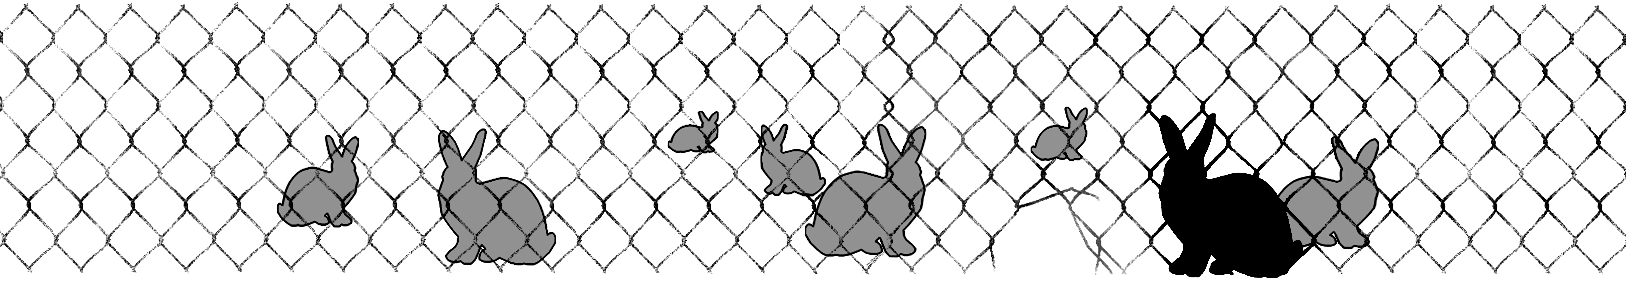 rabbitprooffence_web_07.gif